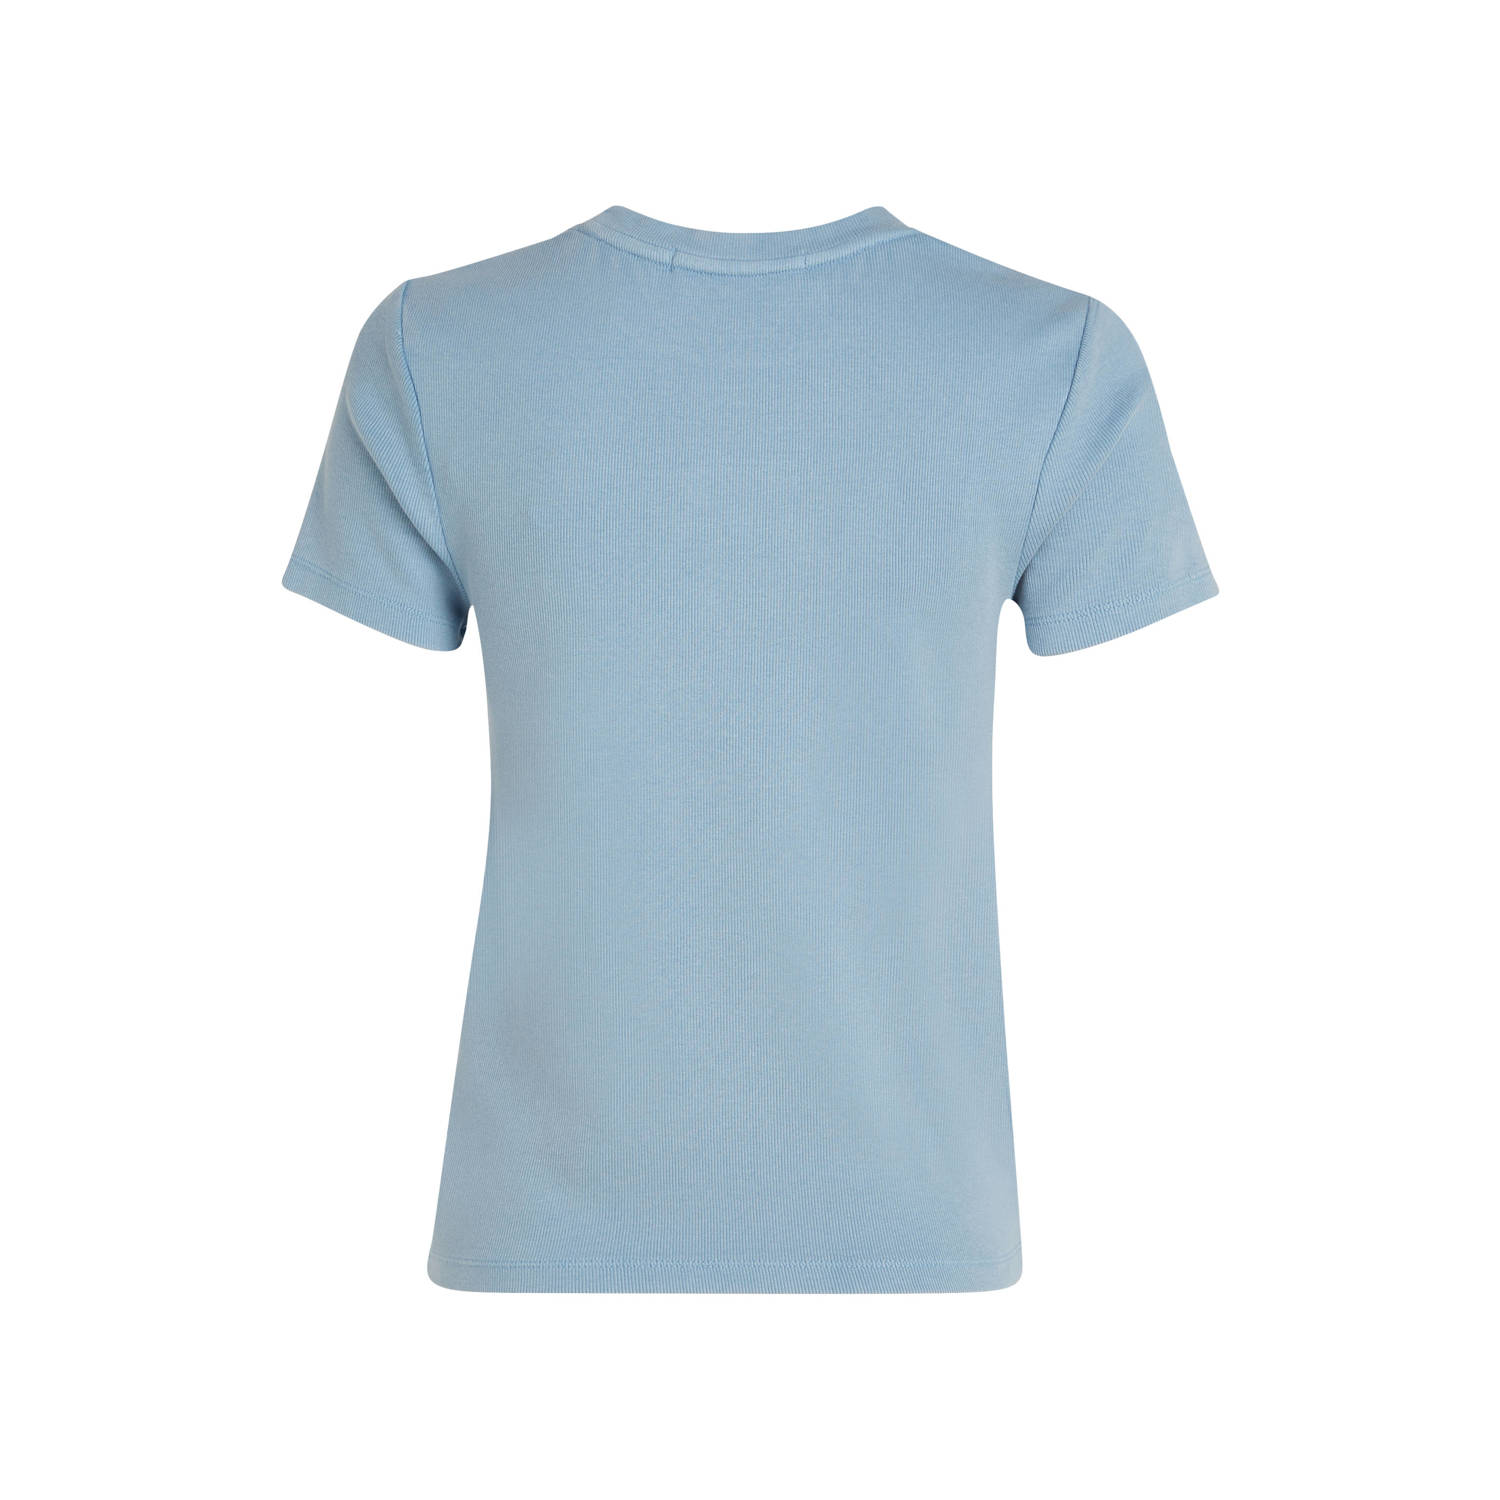 CALVIN KLEIN JEANS ribgebreid T-shirt met logo blauw